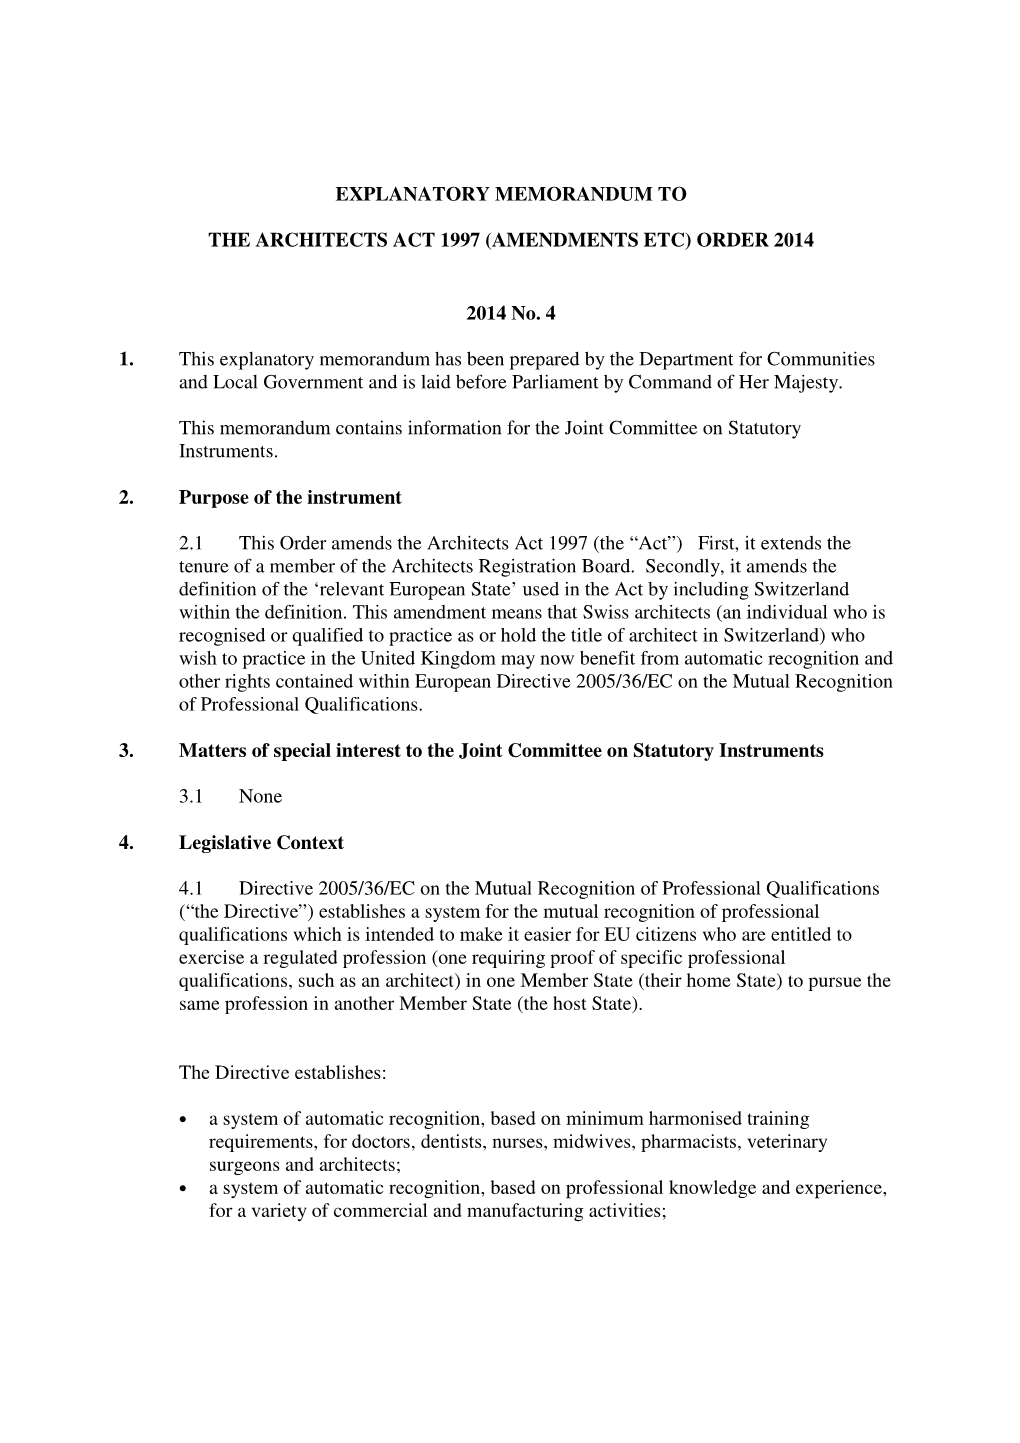 EXPLANATORY MEMORANDUM to the ARCHITECTS ACT 1997 (AMENDMENTS ETC) ORDER 2014 2014 No. 4 1. This Explanatory Memorandum Has Been